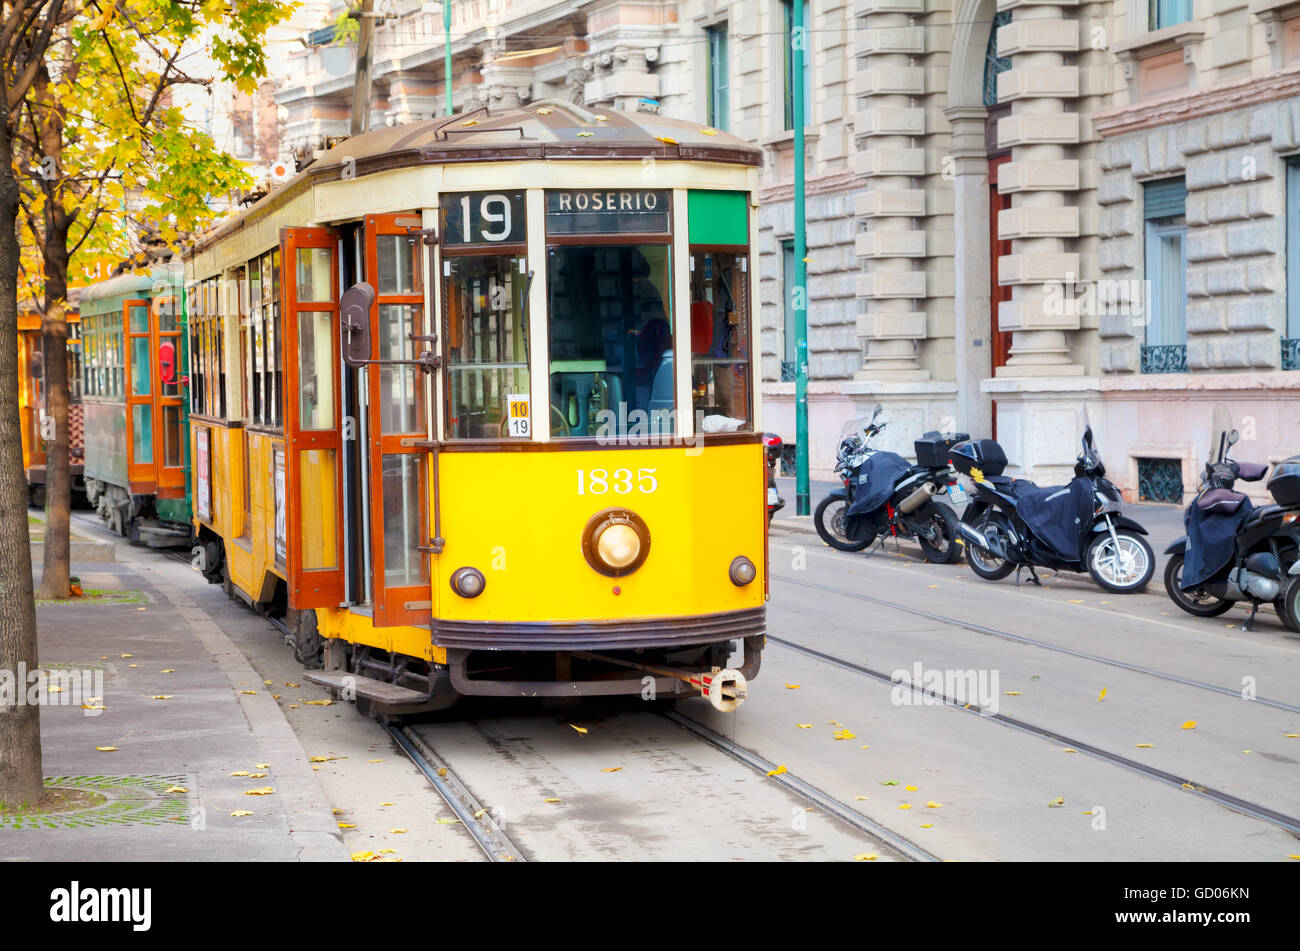 MILAN, ITALY - NOVEMBER 25: Old tram at Piazza Castello on November 25, 2015 in Milan, Italy. Stock Photo